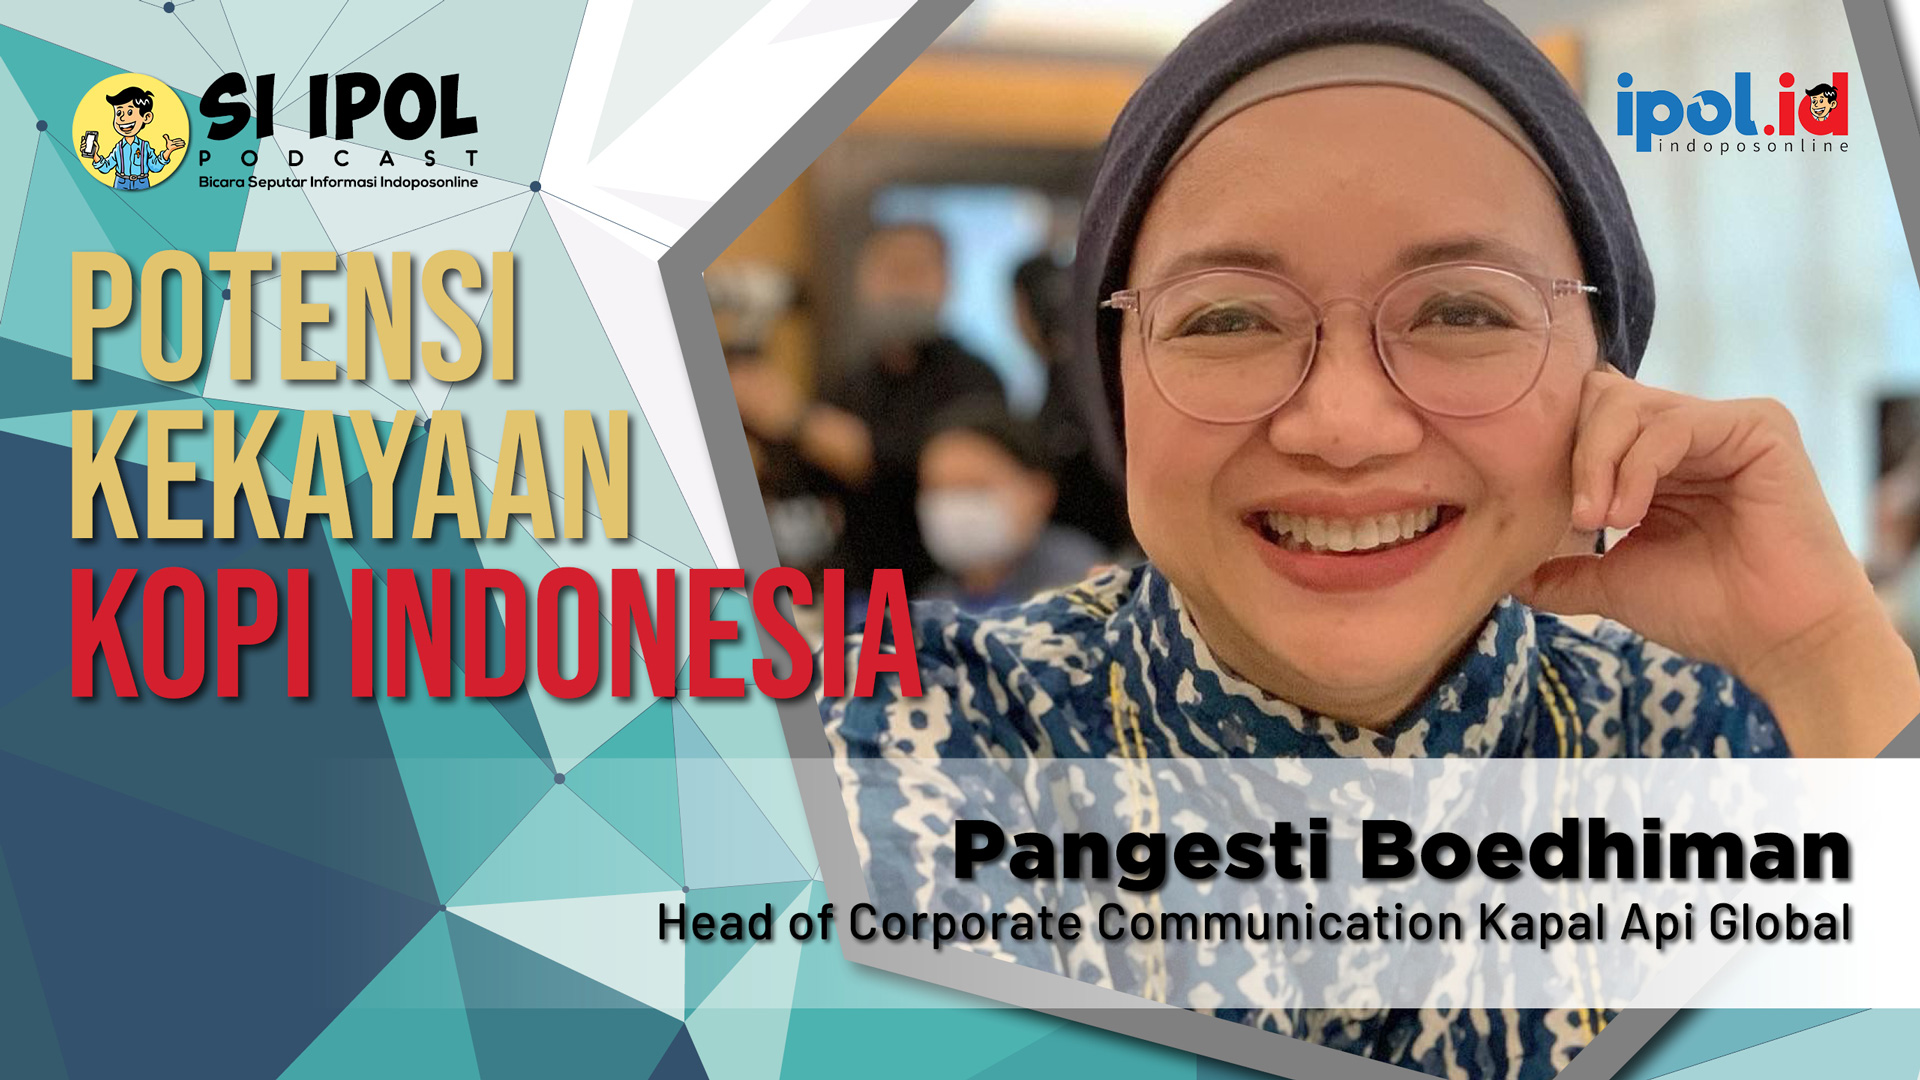 Potensi Kekayaan Kopi Indonesia - Head of Corporate Communication Kapal Api Global Pangesti Boedhiman